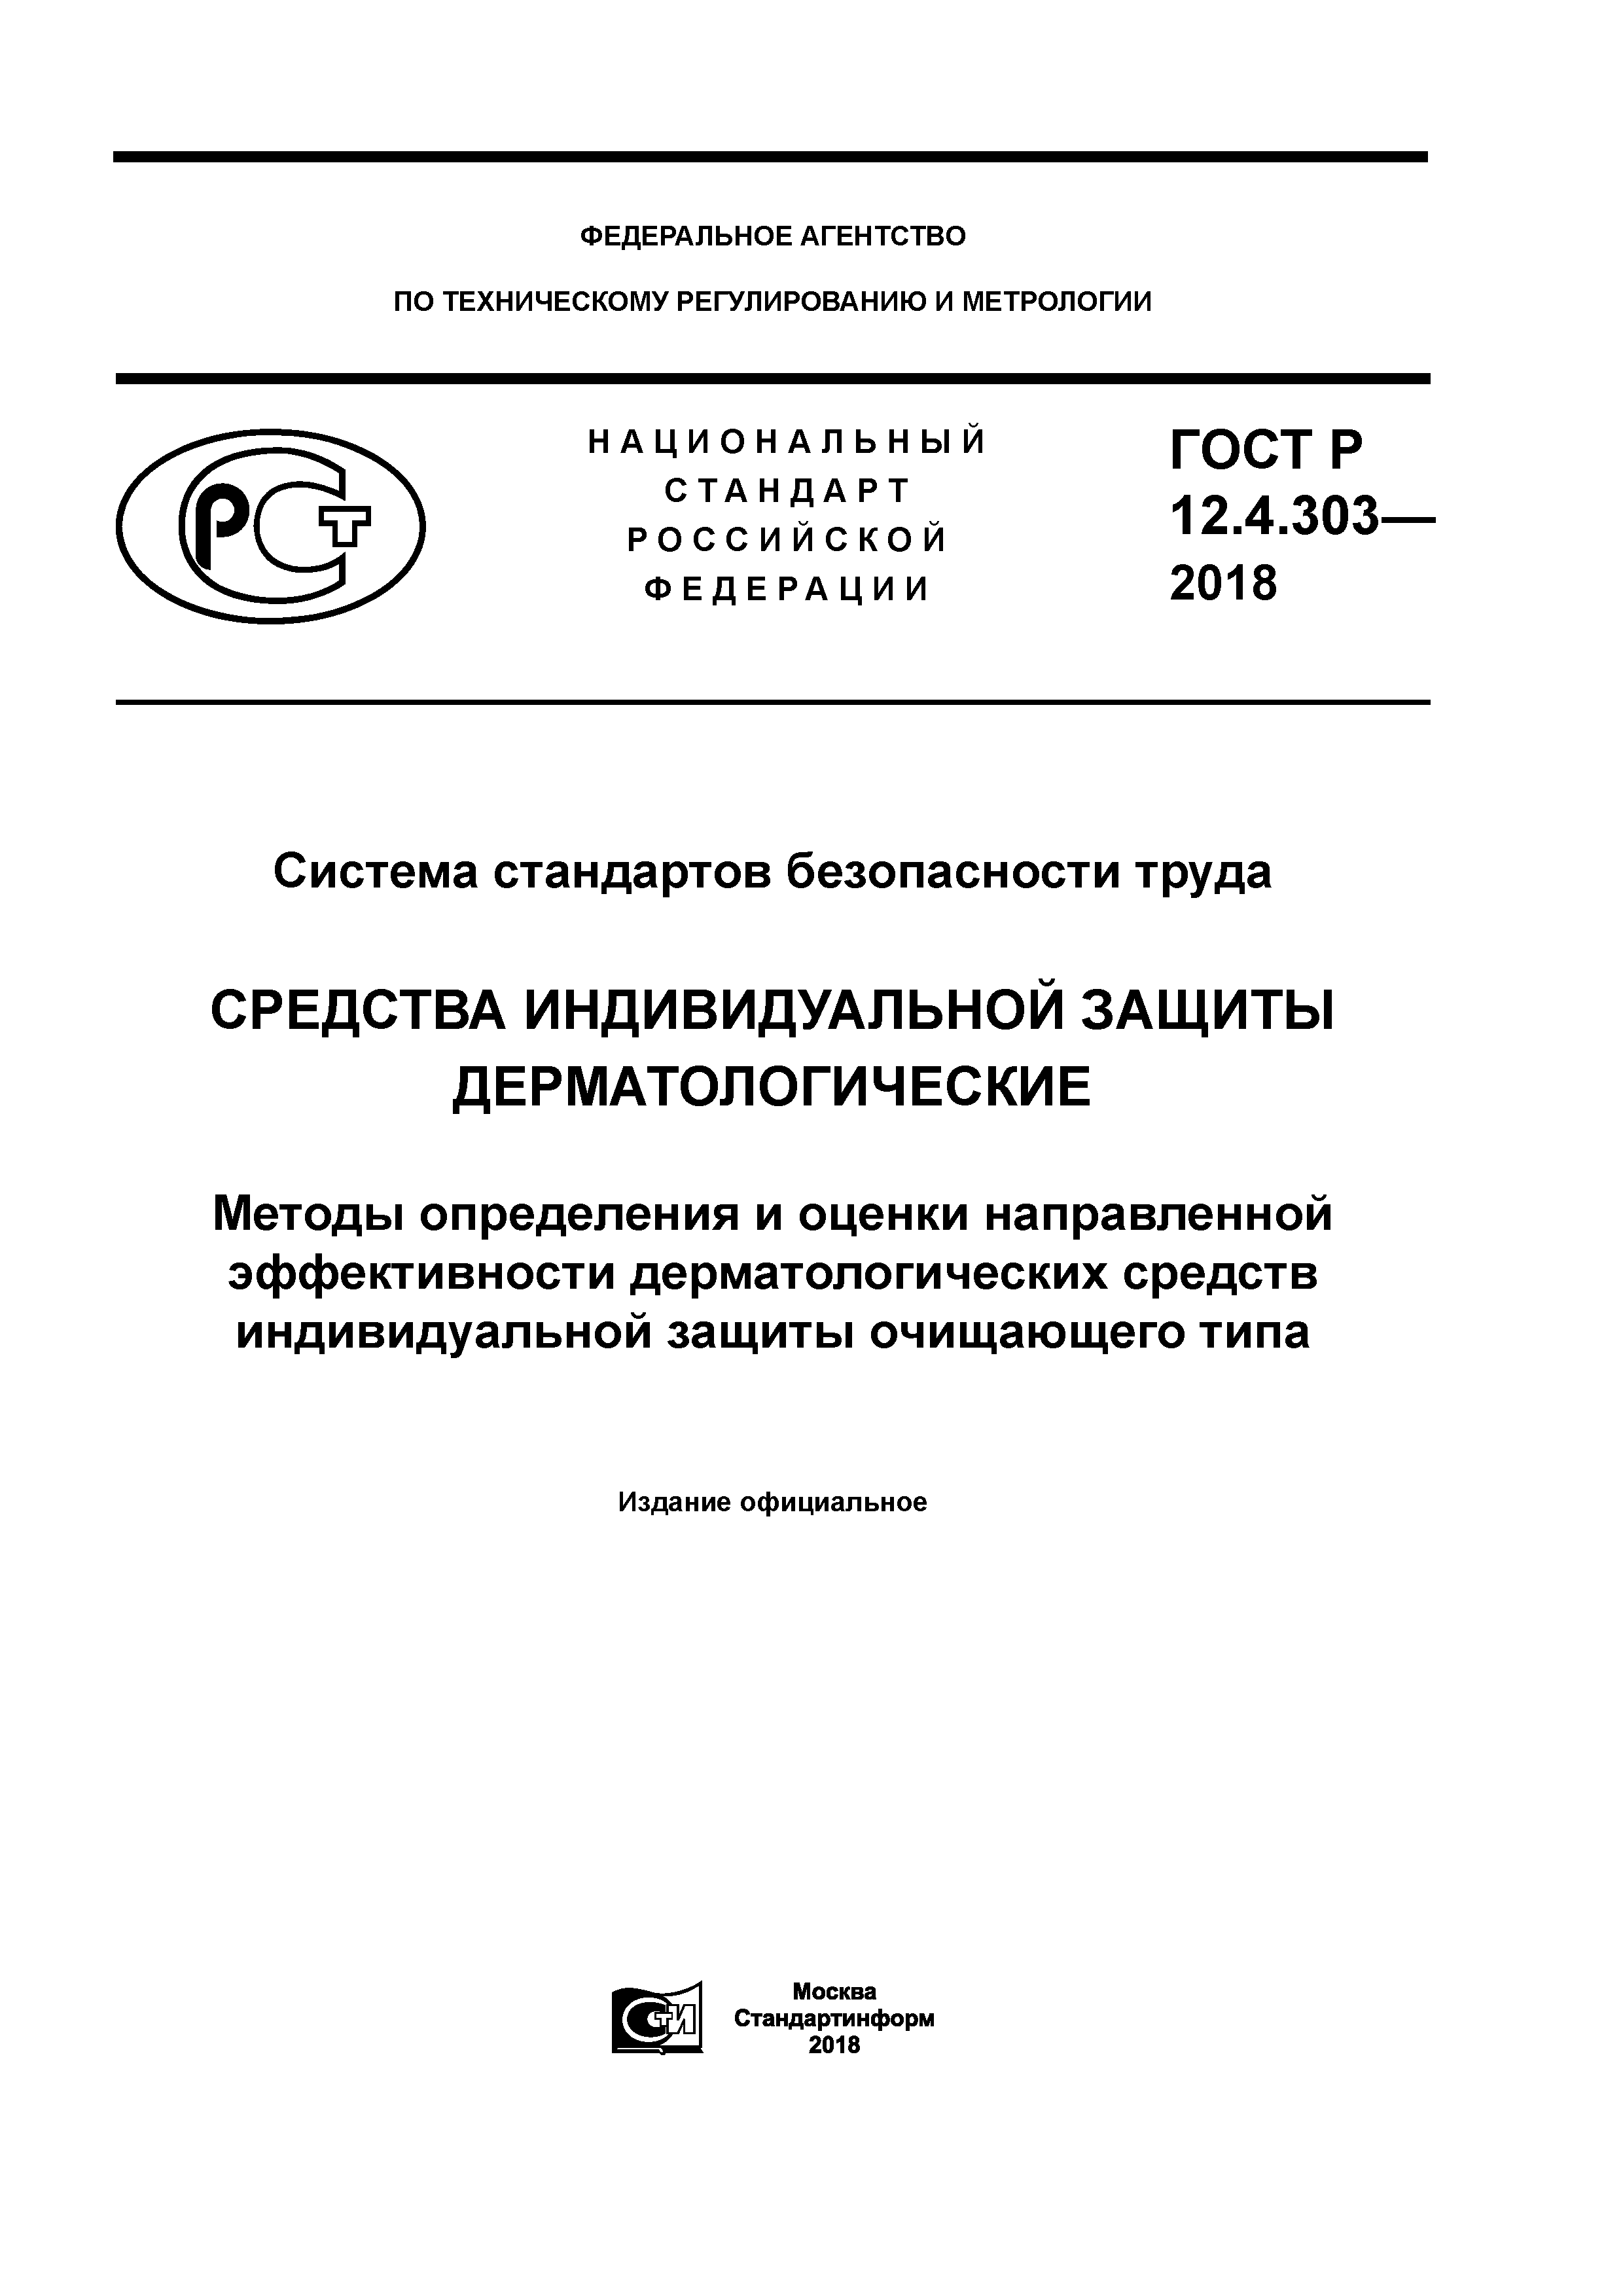 ГОСТ Р 12.4.303-2018